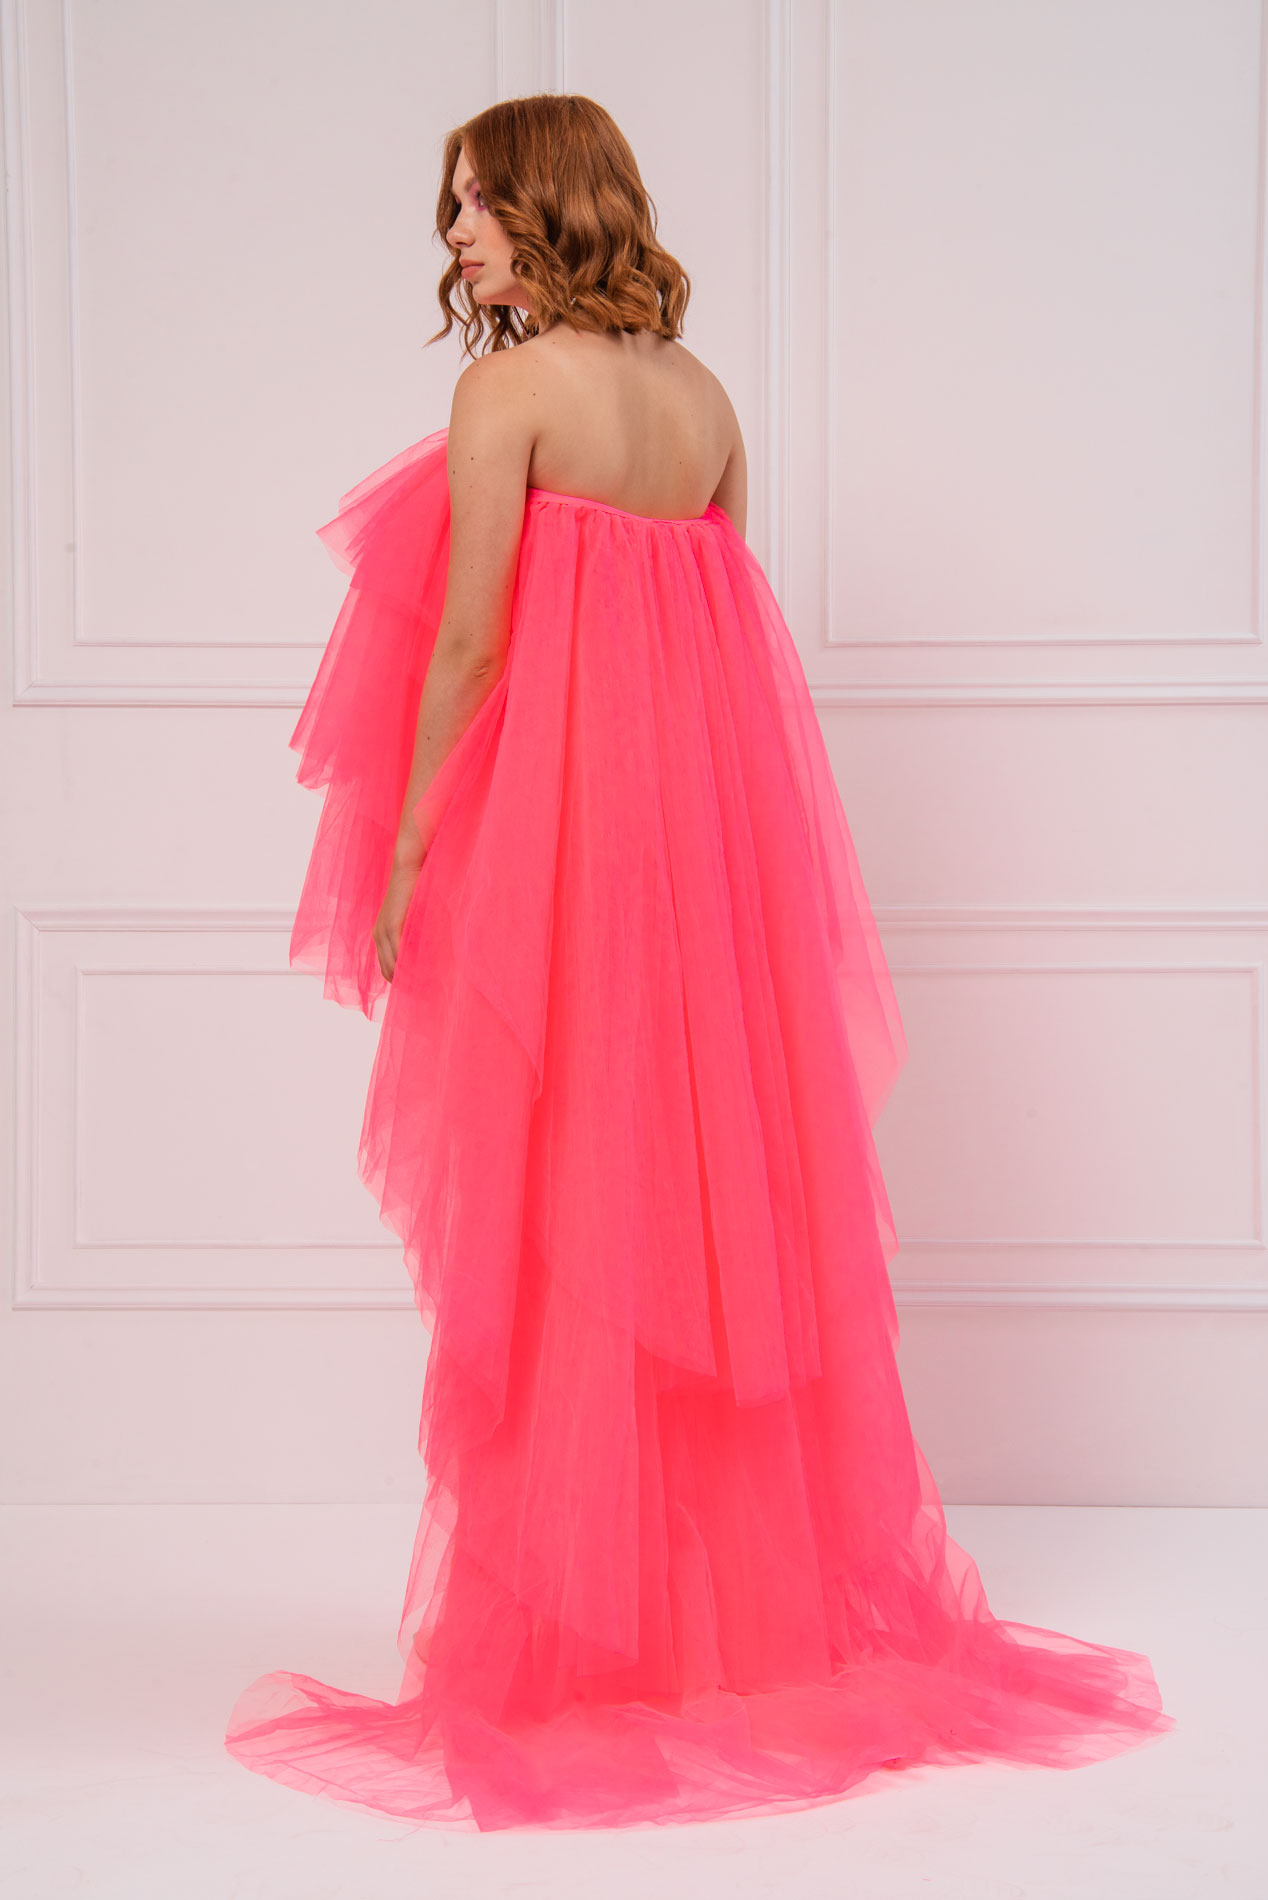 Strapless Ruffle Neon Pink Mini Dress